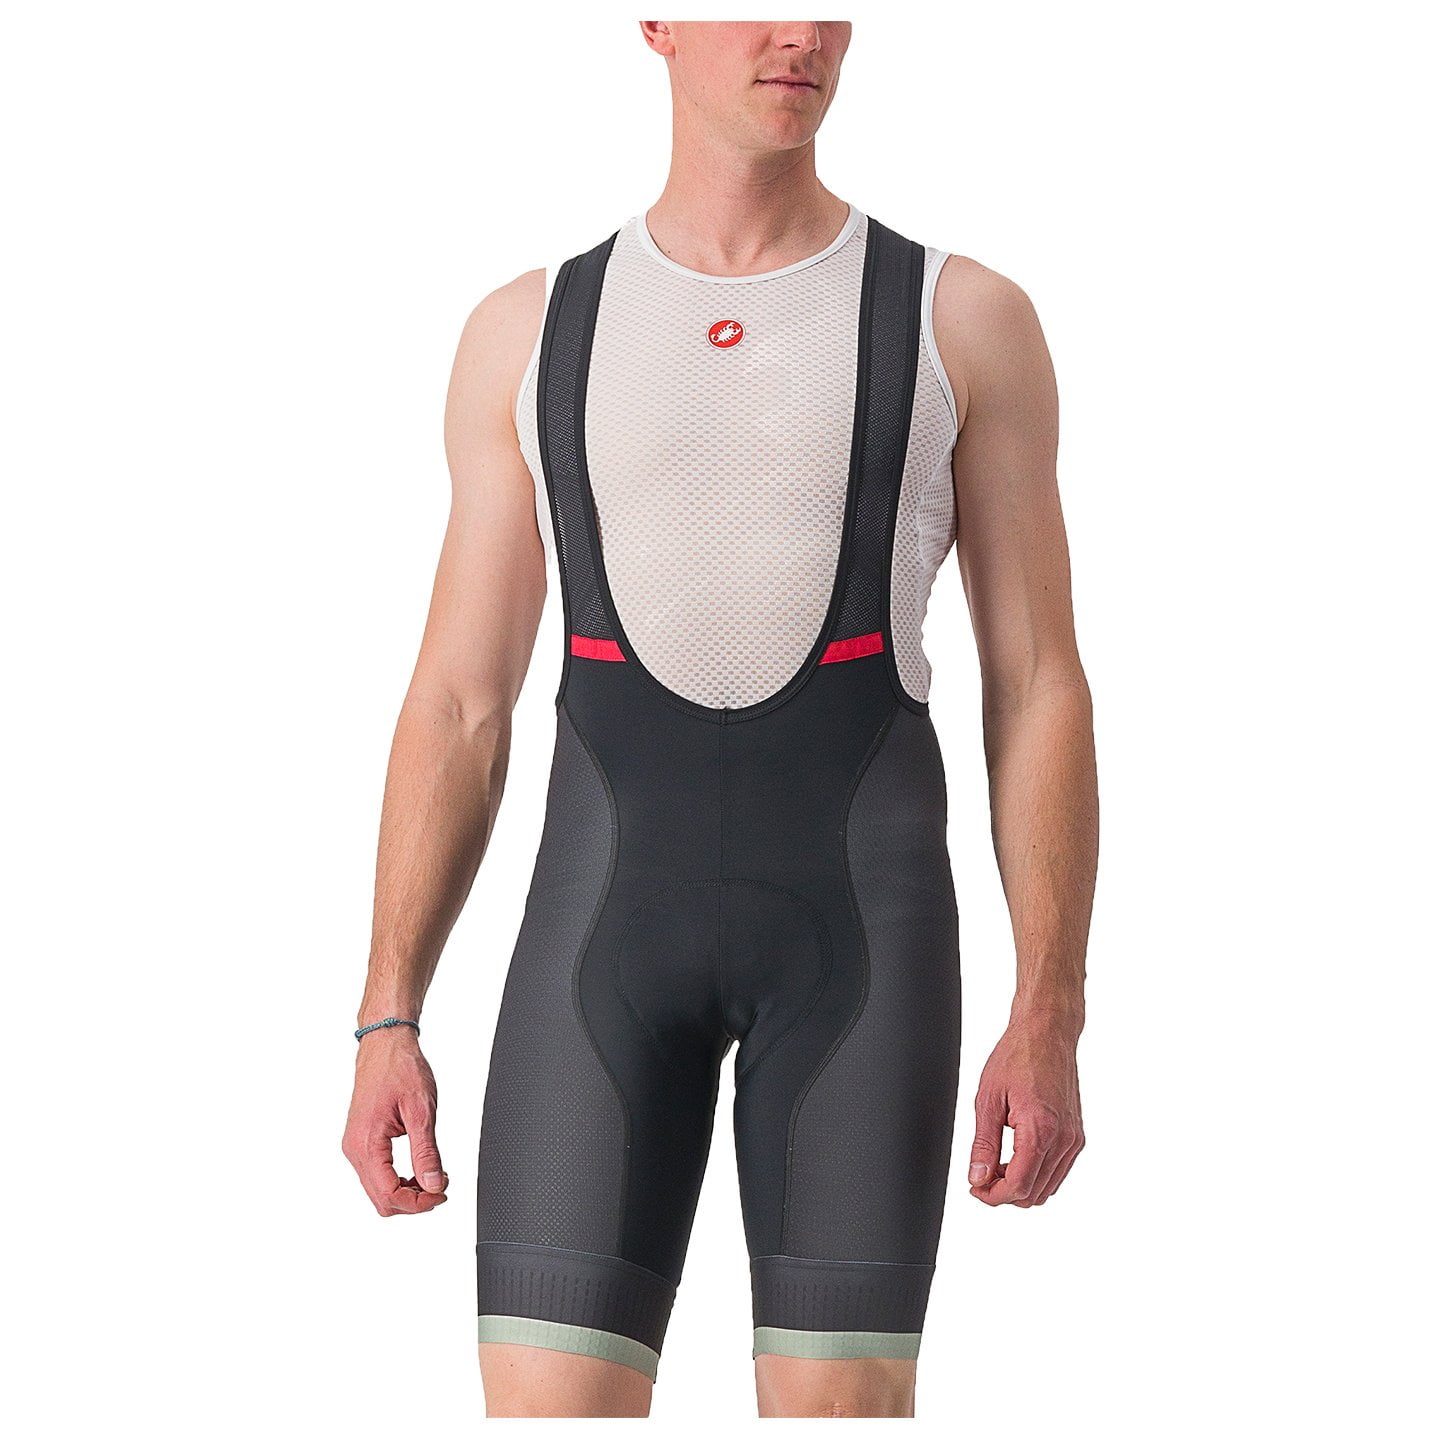 CASTELLI Competizione Kit Bib Shorts Bib Shorts, for men, size XL, Cycle shorts, Cycling clothing